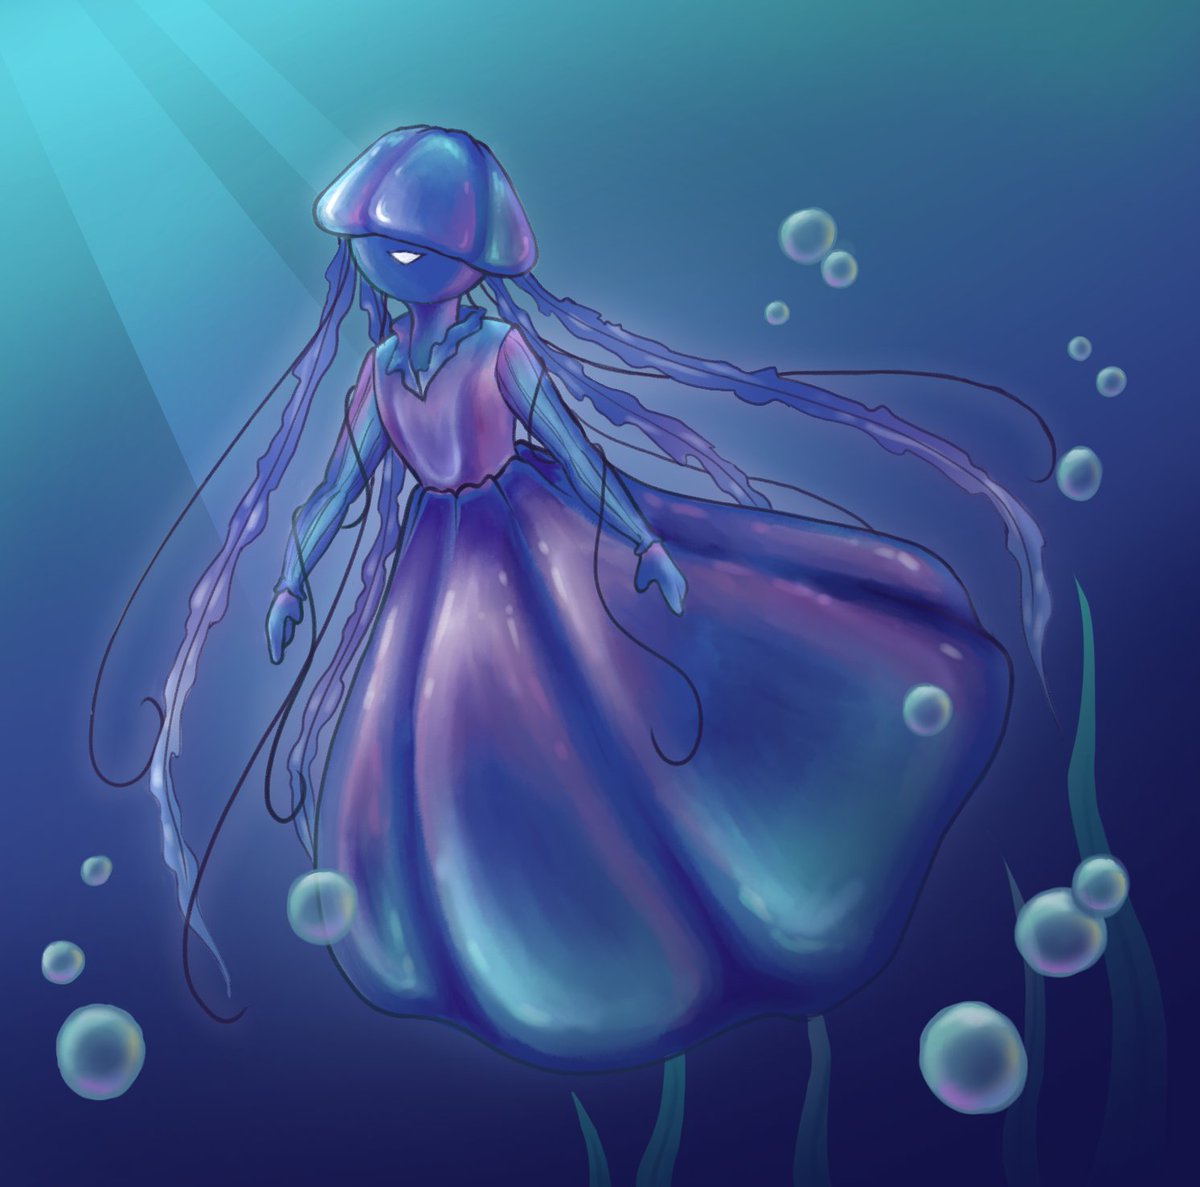 I'm late and I'm sure I won't win but I still proud of her design ♡♡

#MermayWarriorsxppen2023 
@XPPEN 

#jellyfish #digitalillustration #mermay2023 #originalcharacter #contestentry #Warriors #ocean #oceanlife #nature